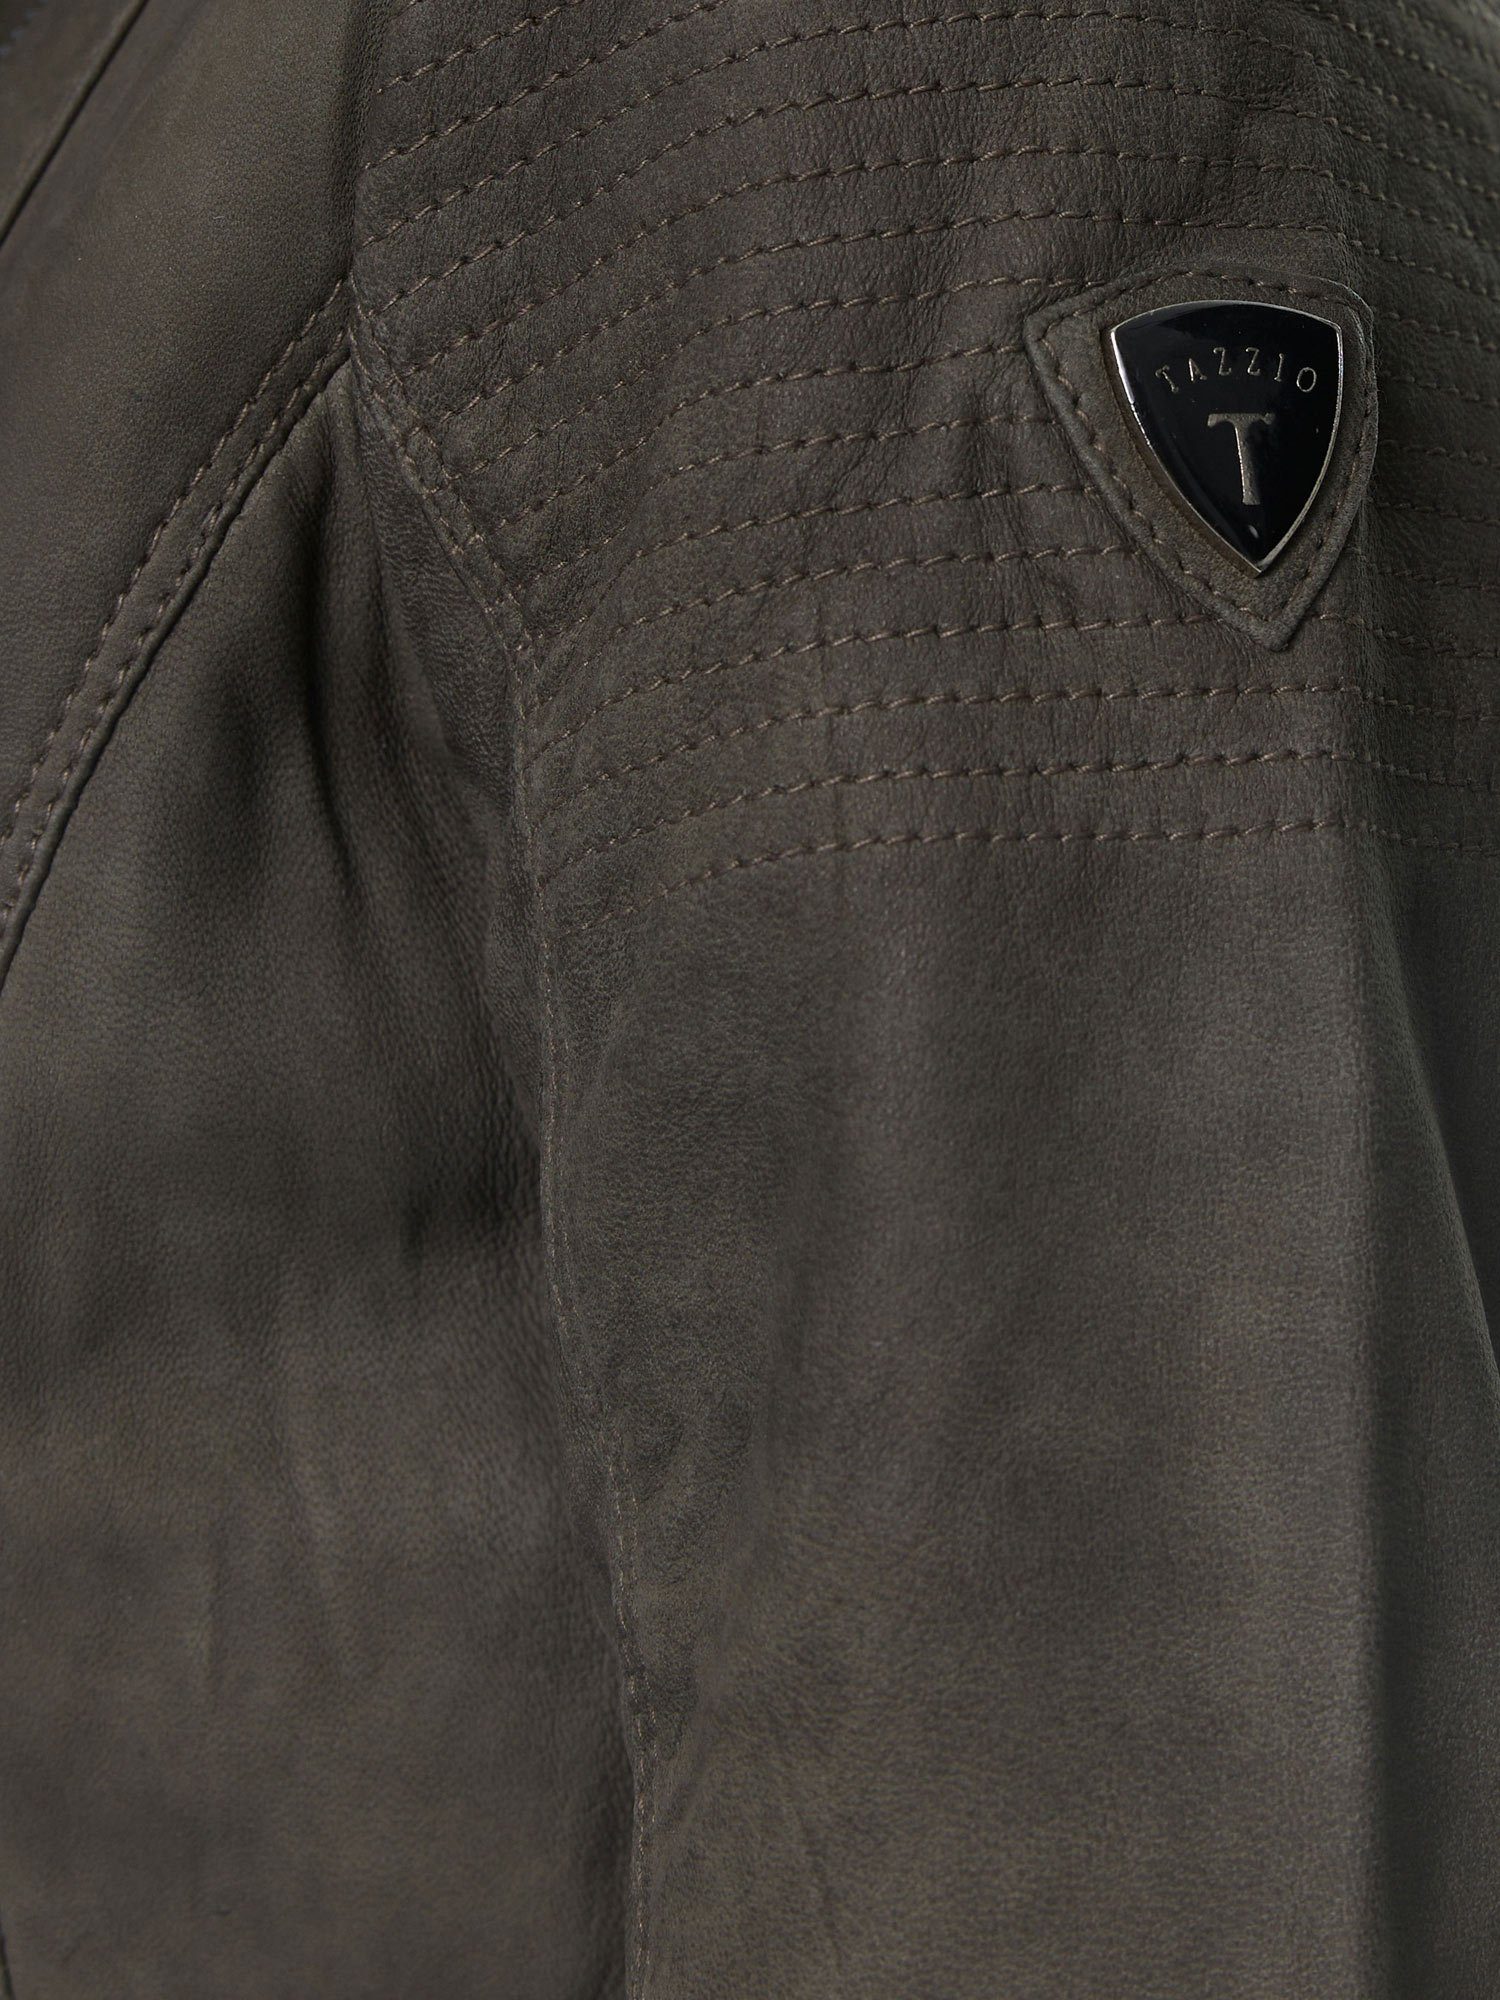 Reverskragen khaki Damen mit Lederjacke Look Zipper-Details im Biker Leder & Jacke F500 Tazzio